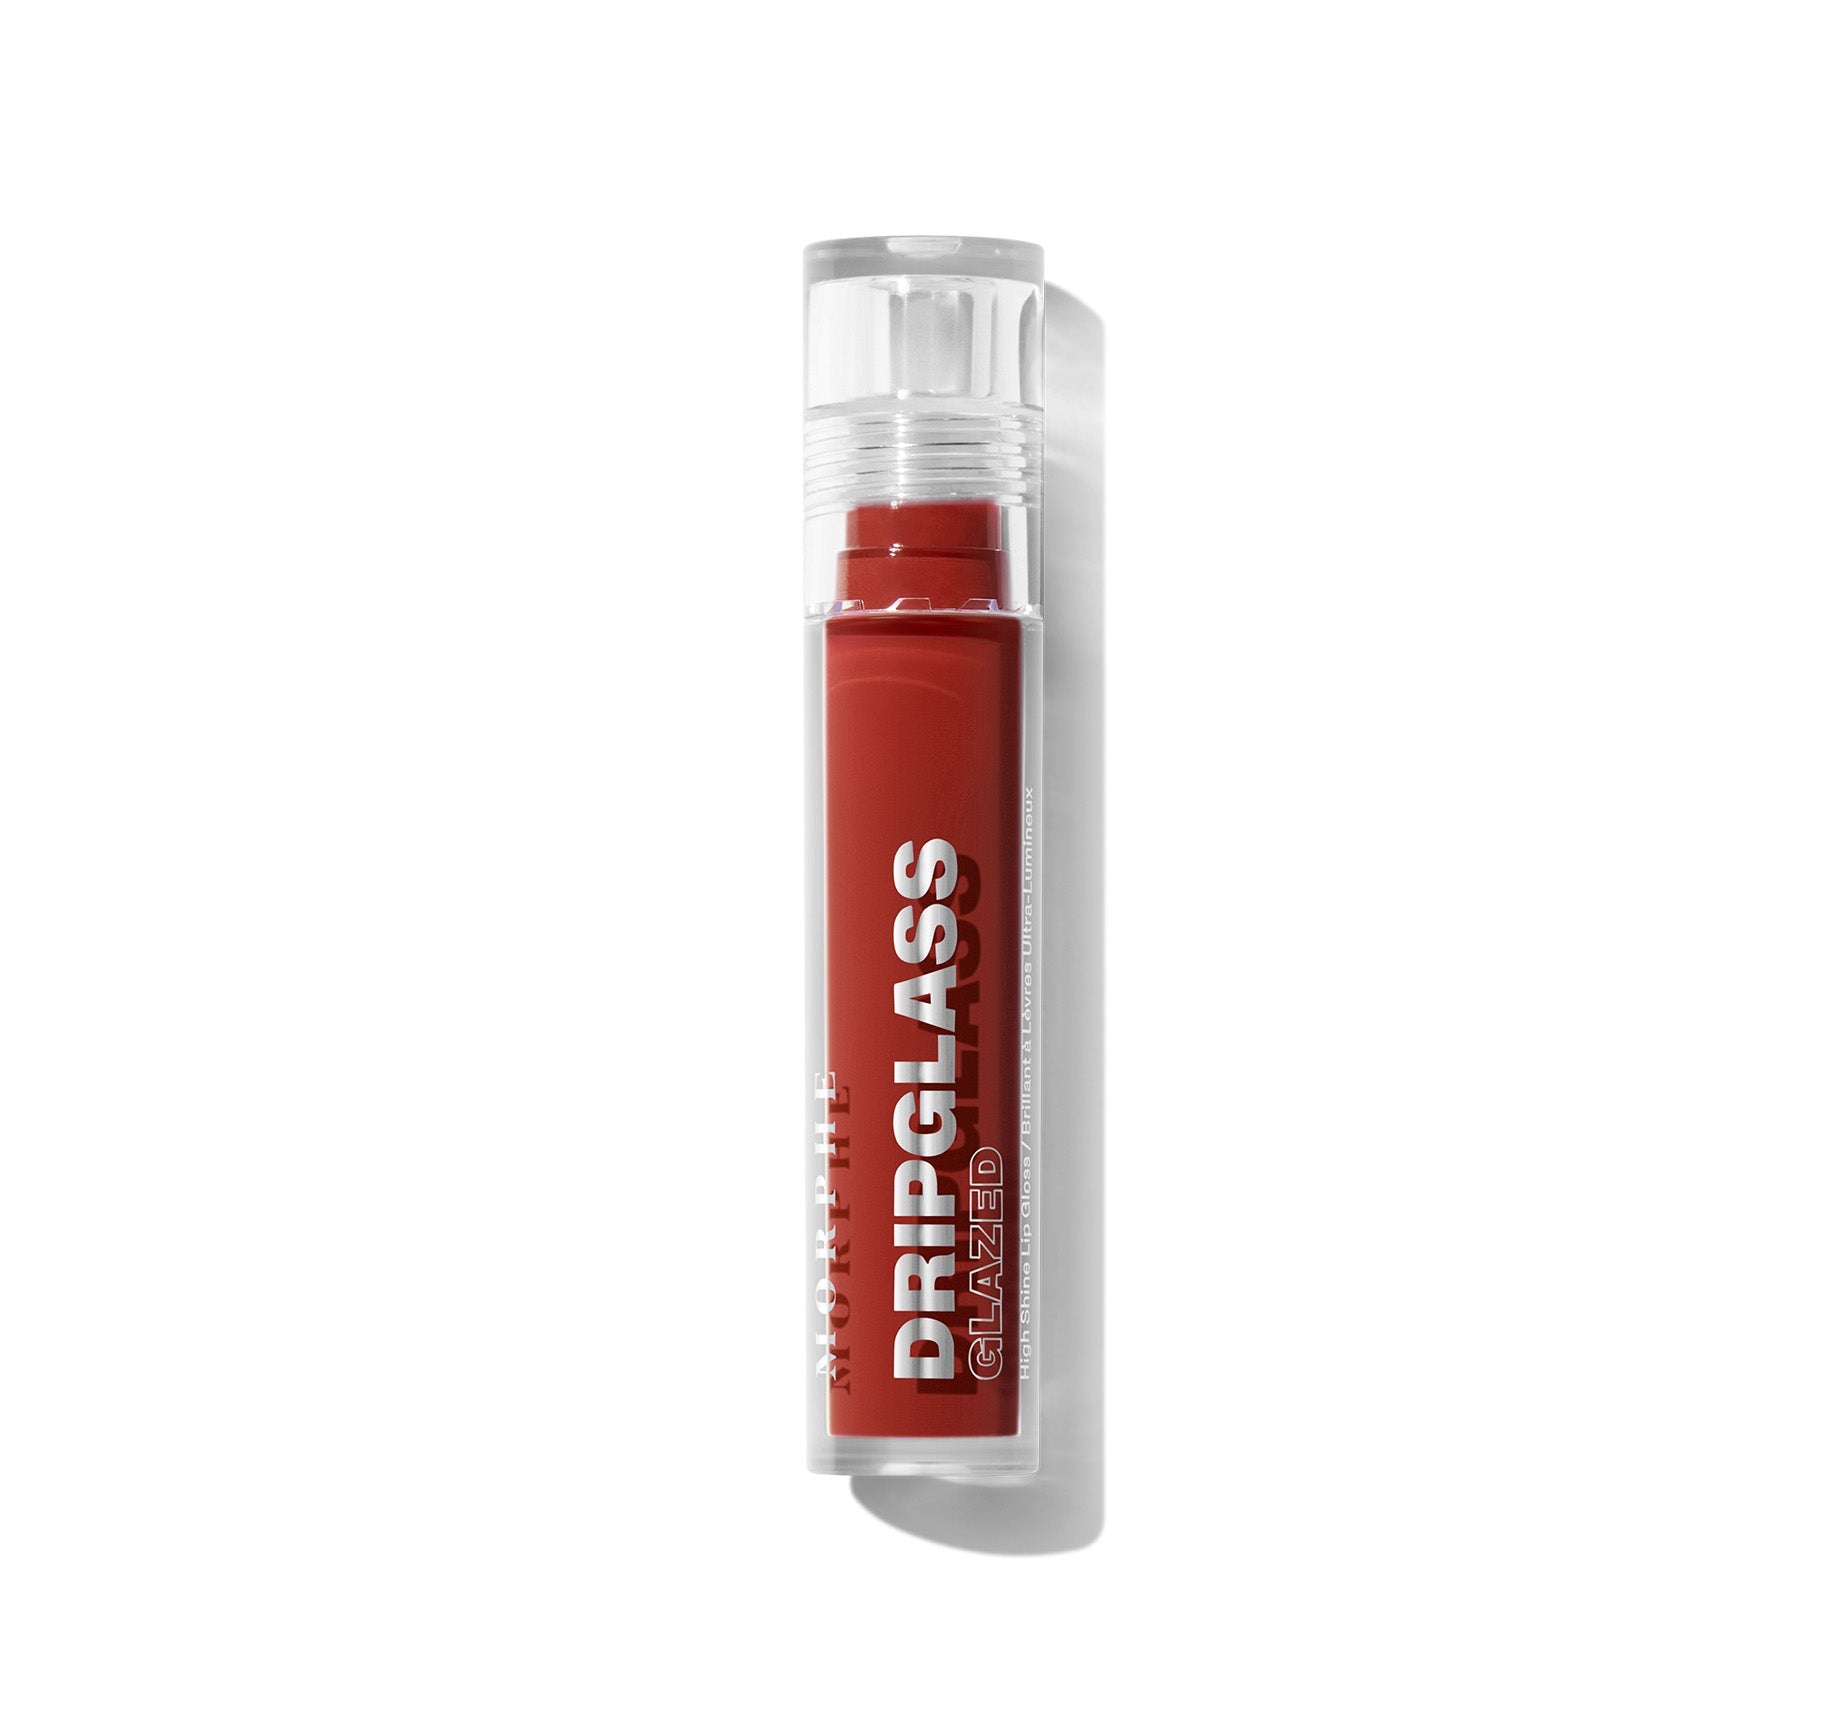 Dripglass Glazed High Shine Lip Gloss - Unbreakable Brick - Image 4